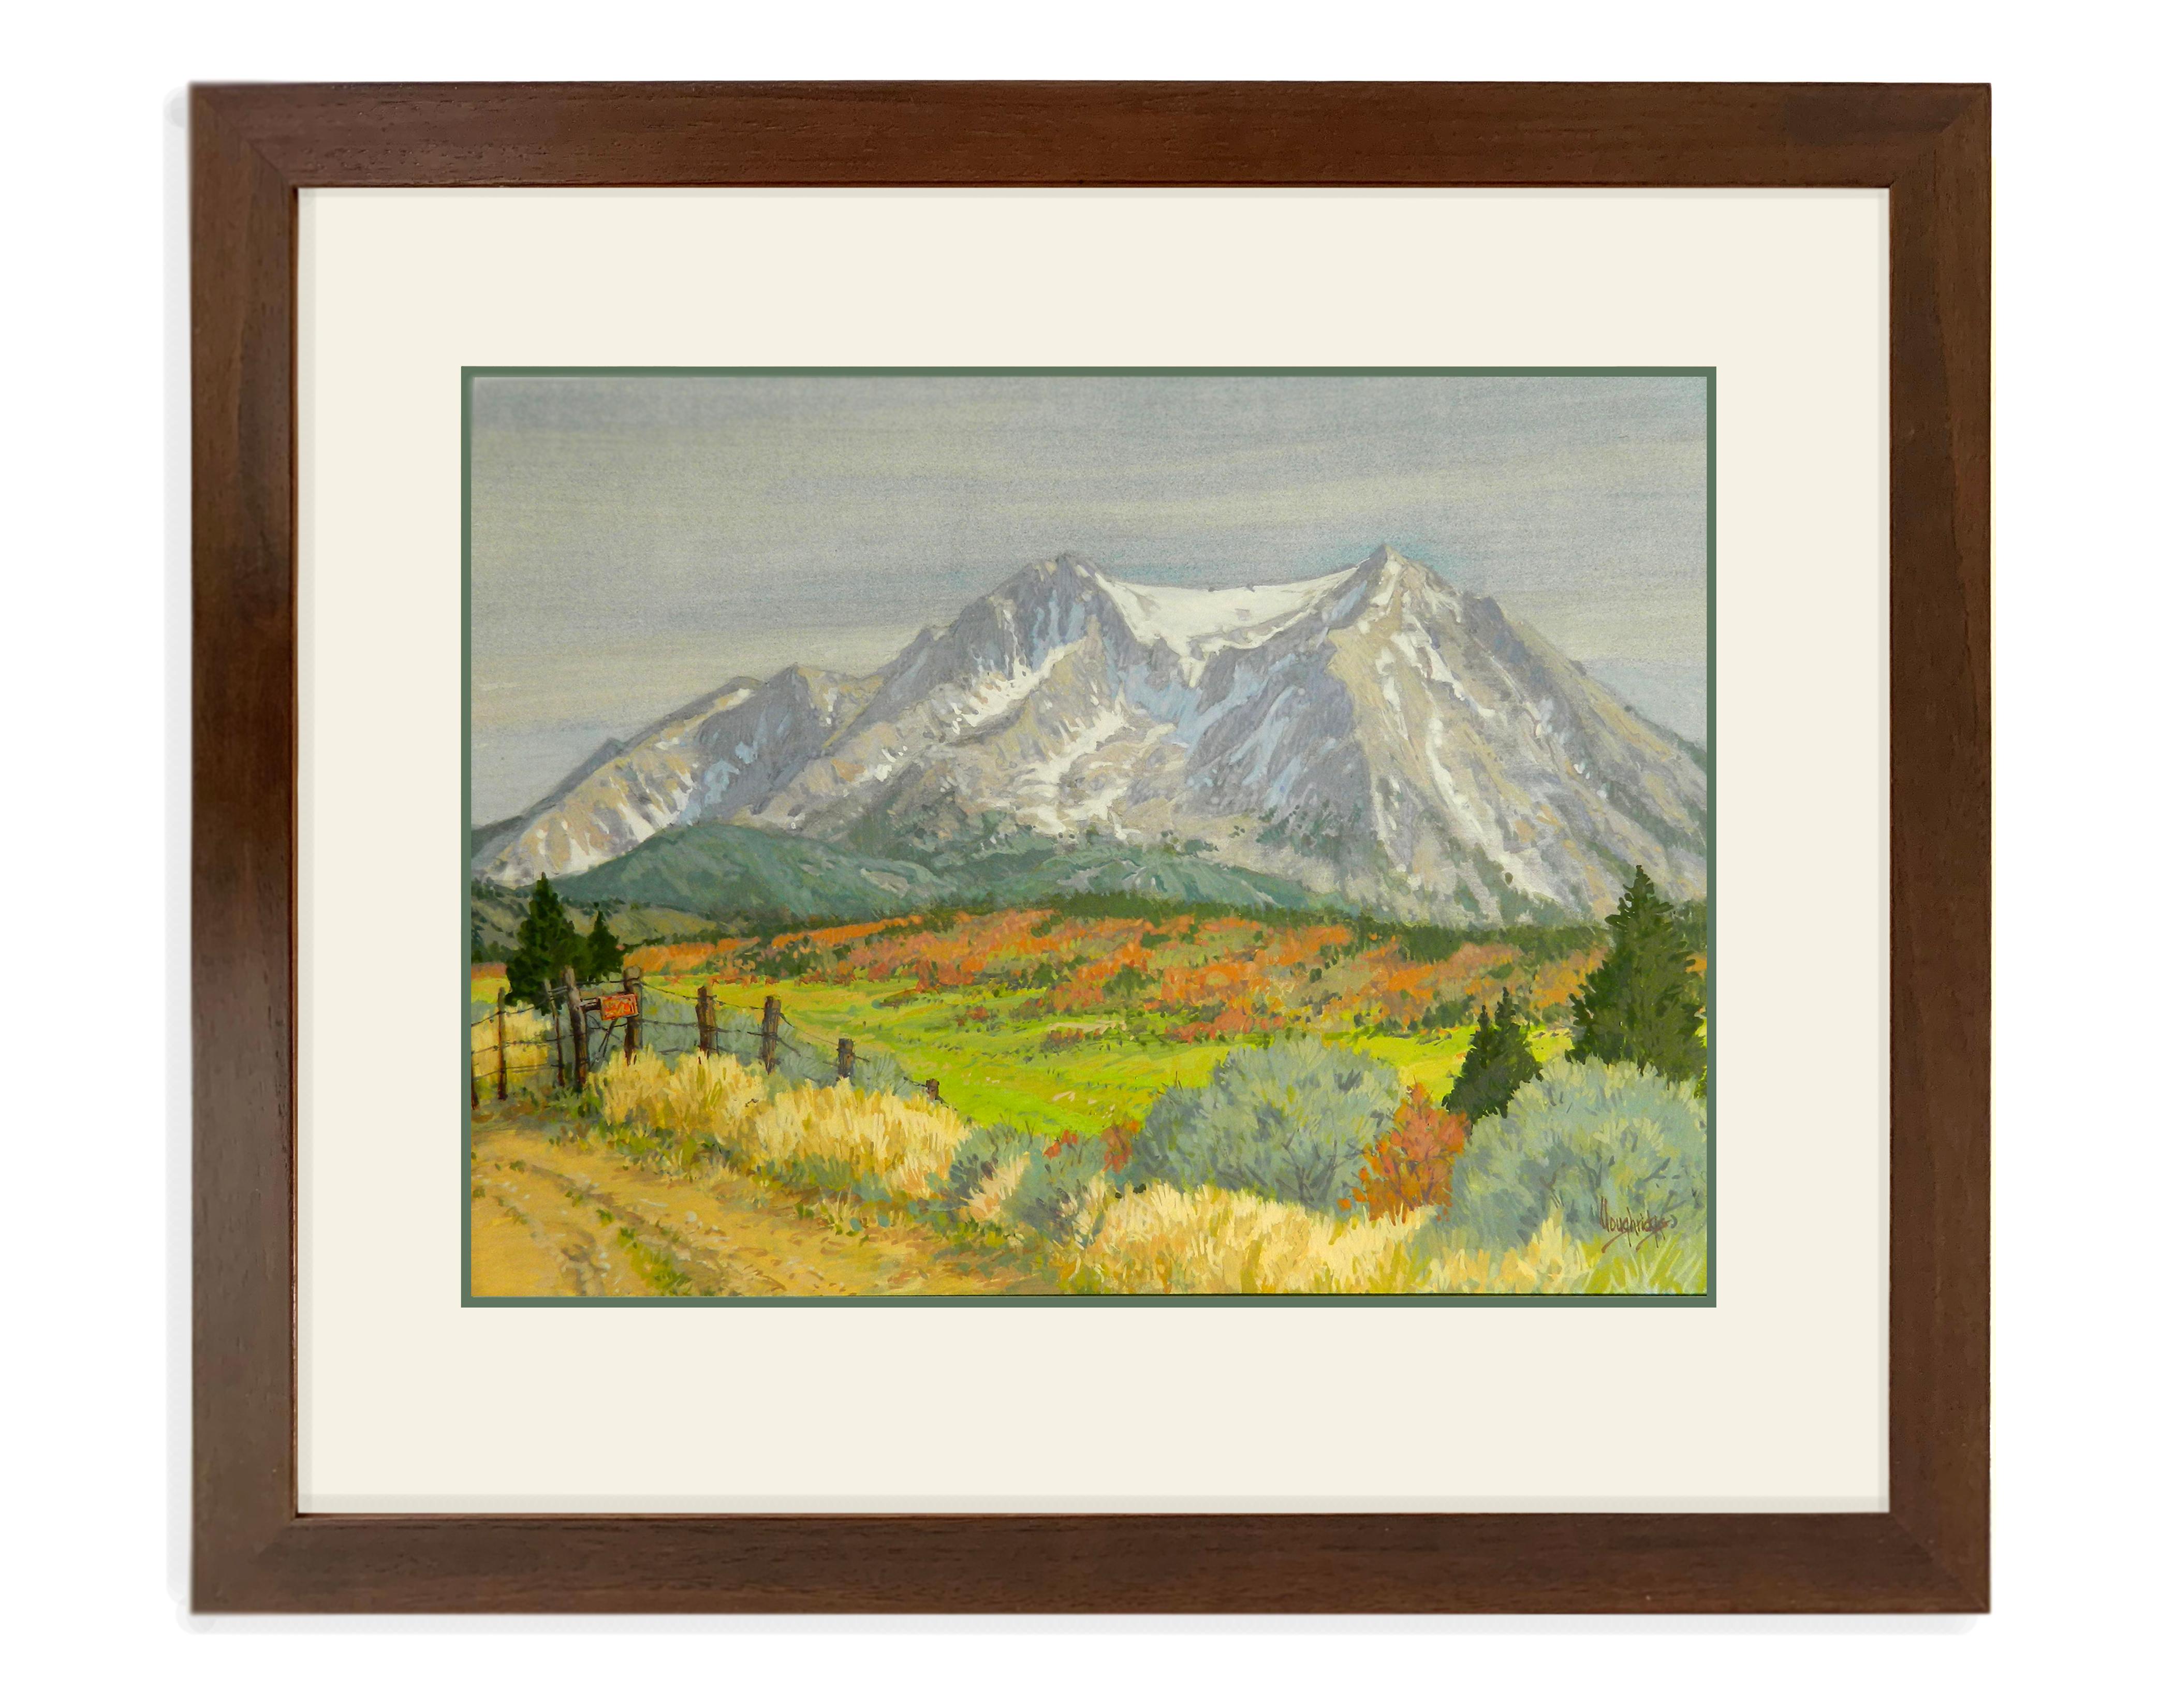 Posted Mt. Sopris (contemporary western landscape watercolor of 14, 000 ft. peak) - Art by Leon Loughridge